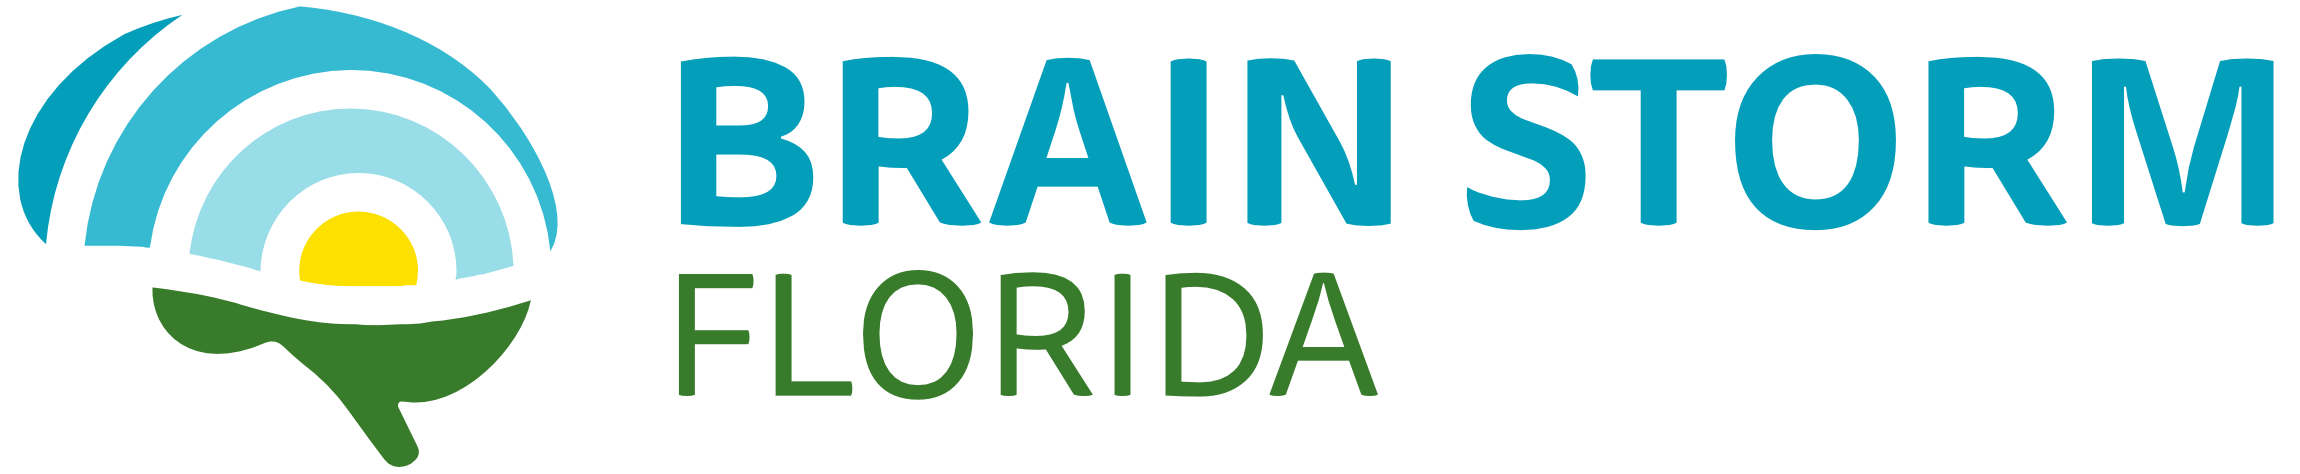 Brainstorm Florida